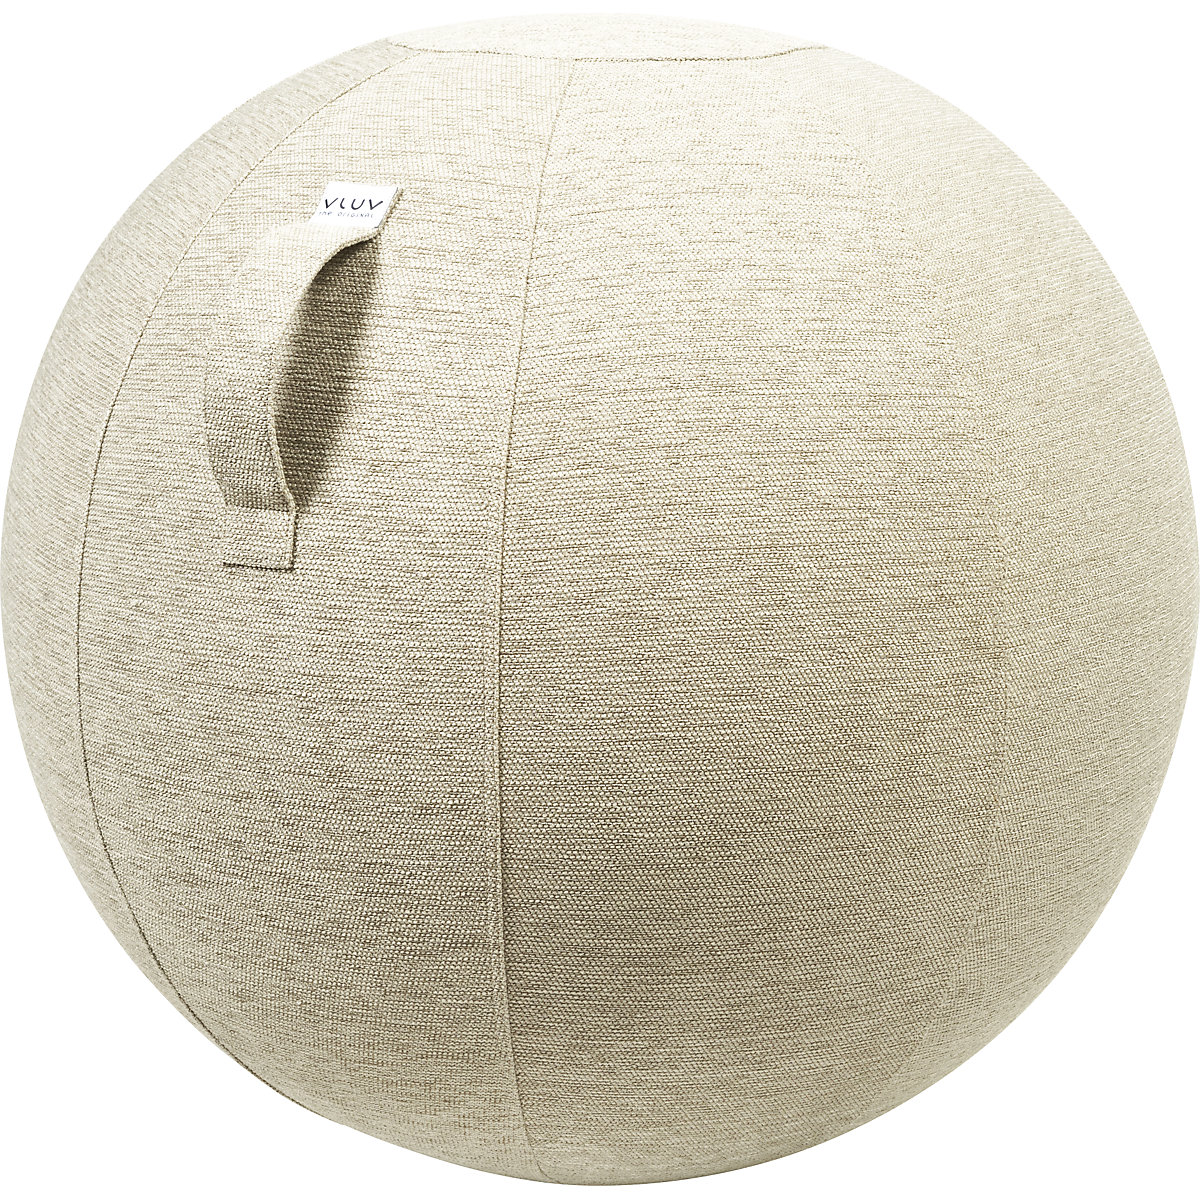 STOV Swiss ball – VLUV, fabric version, 700 – 750 mm, pebble grey